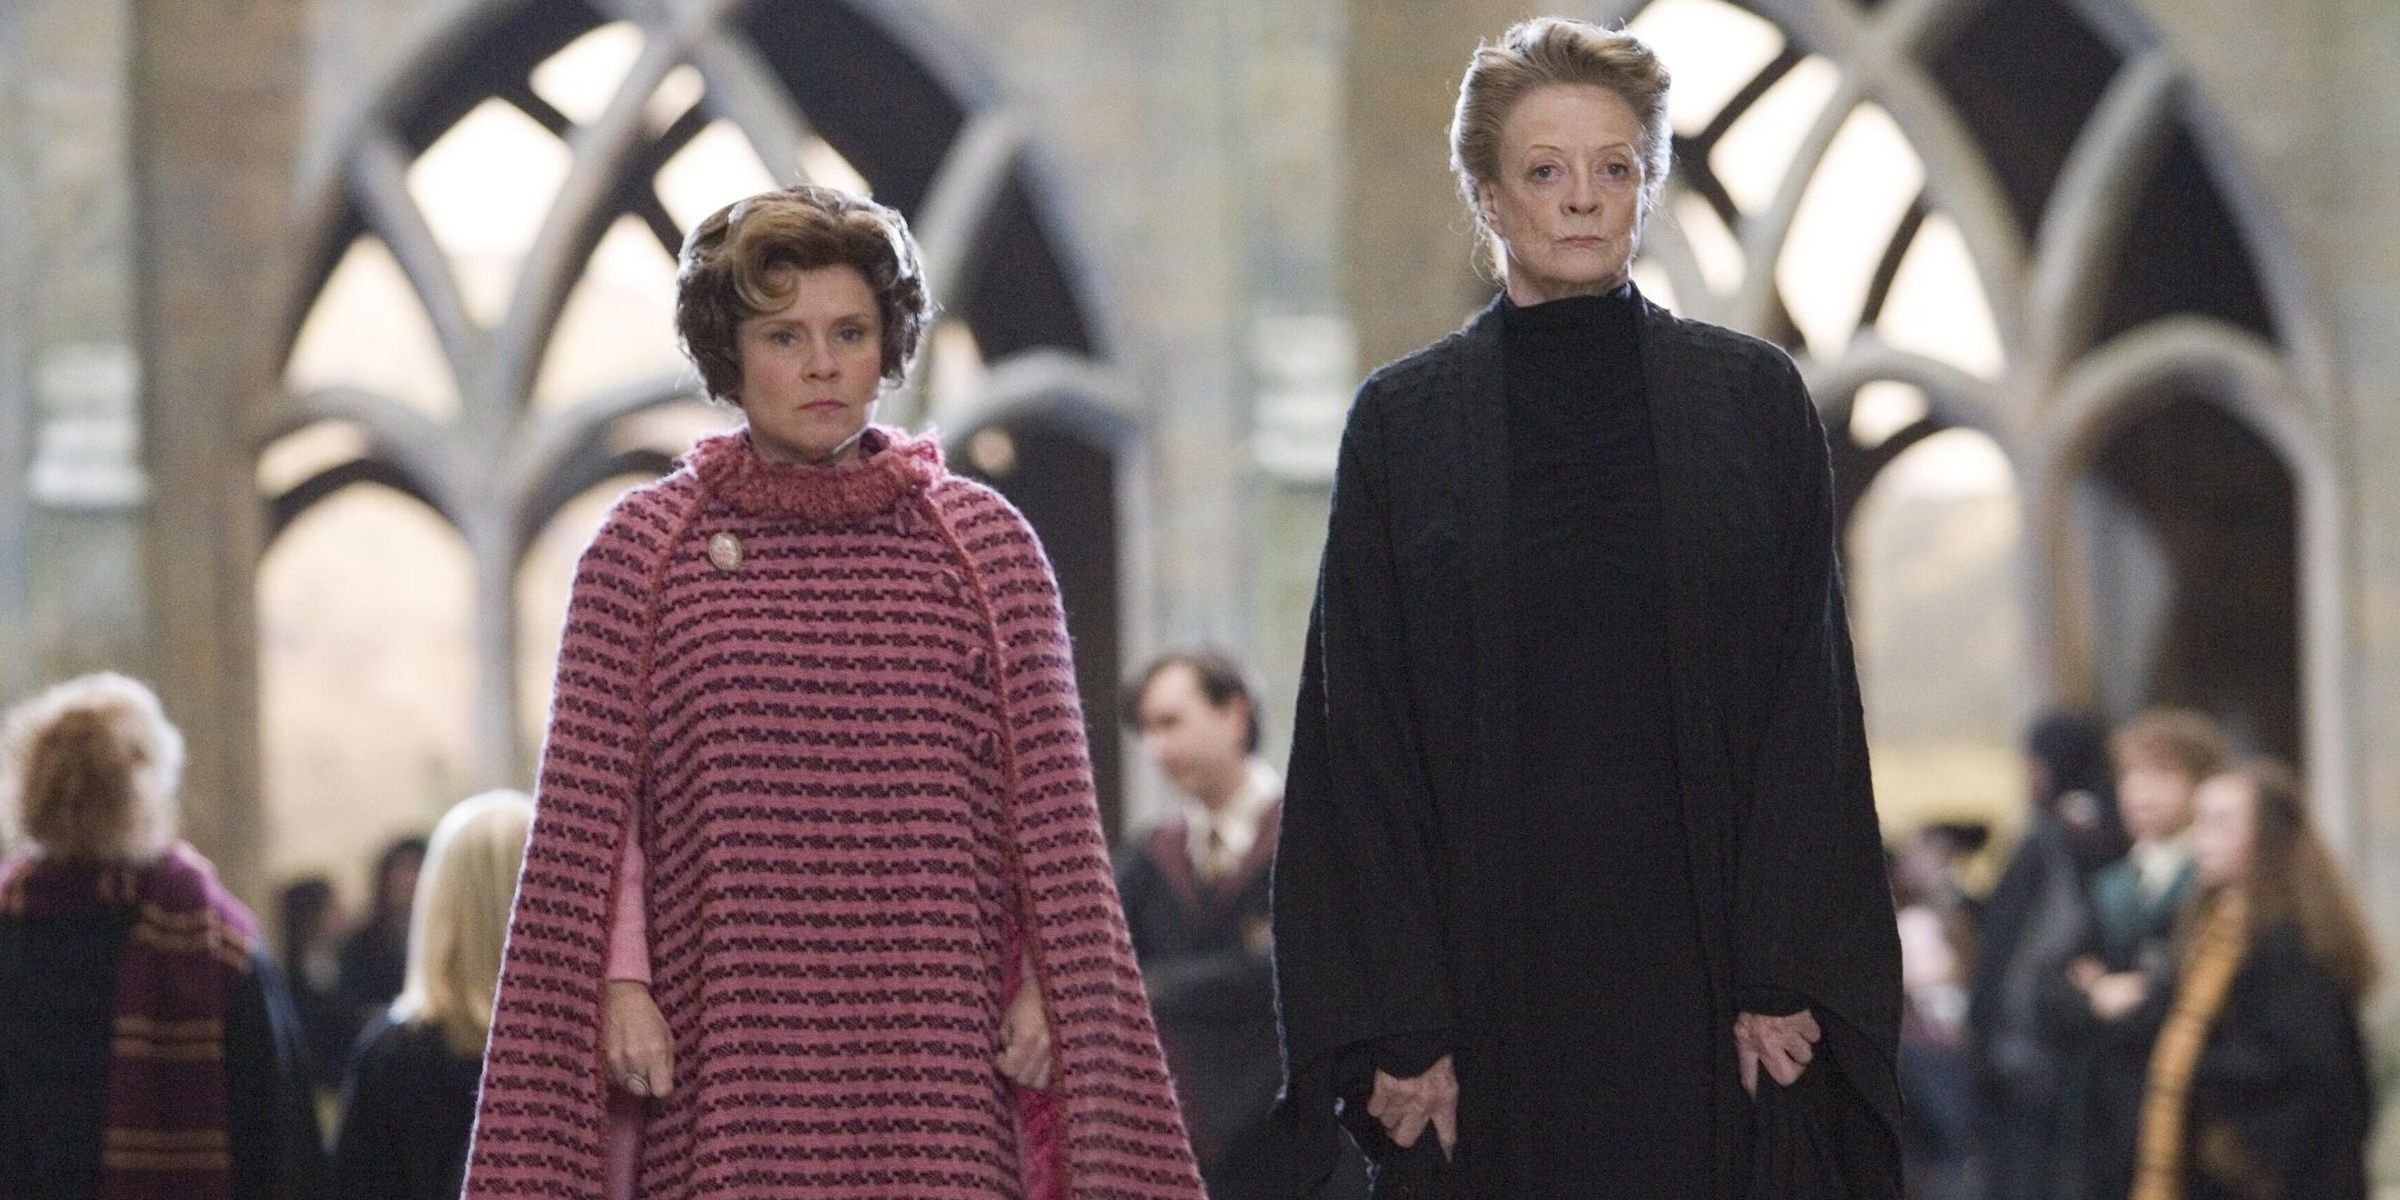 Professor McGonagall and Dolores Umbridge together in Harry Potter